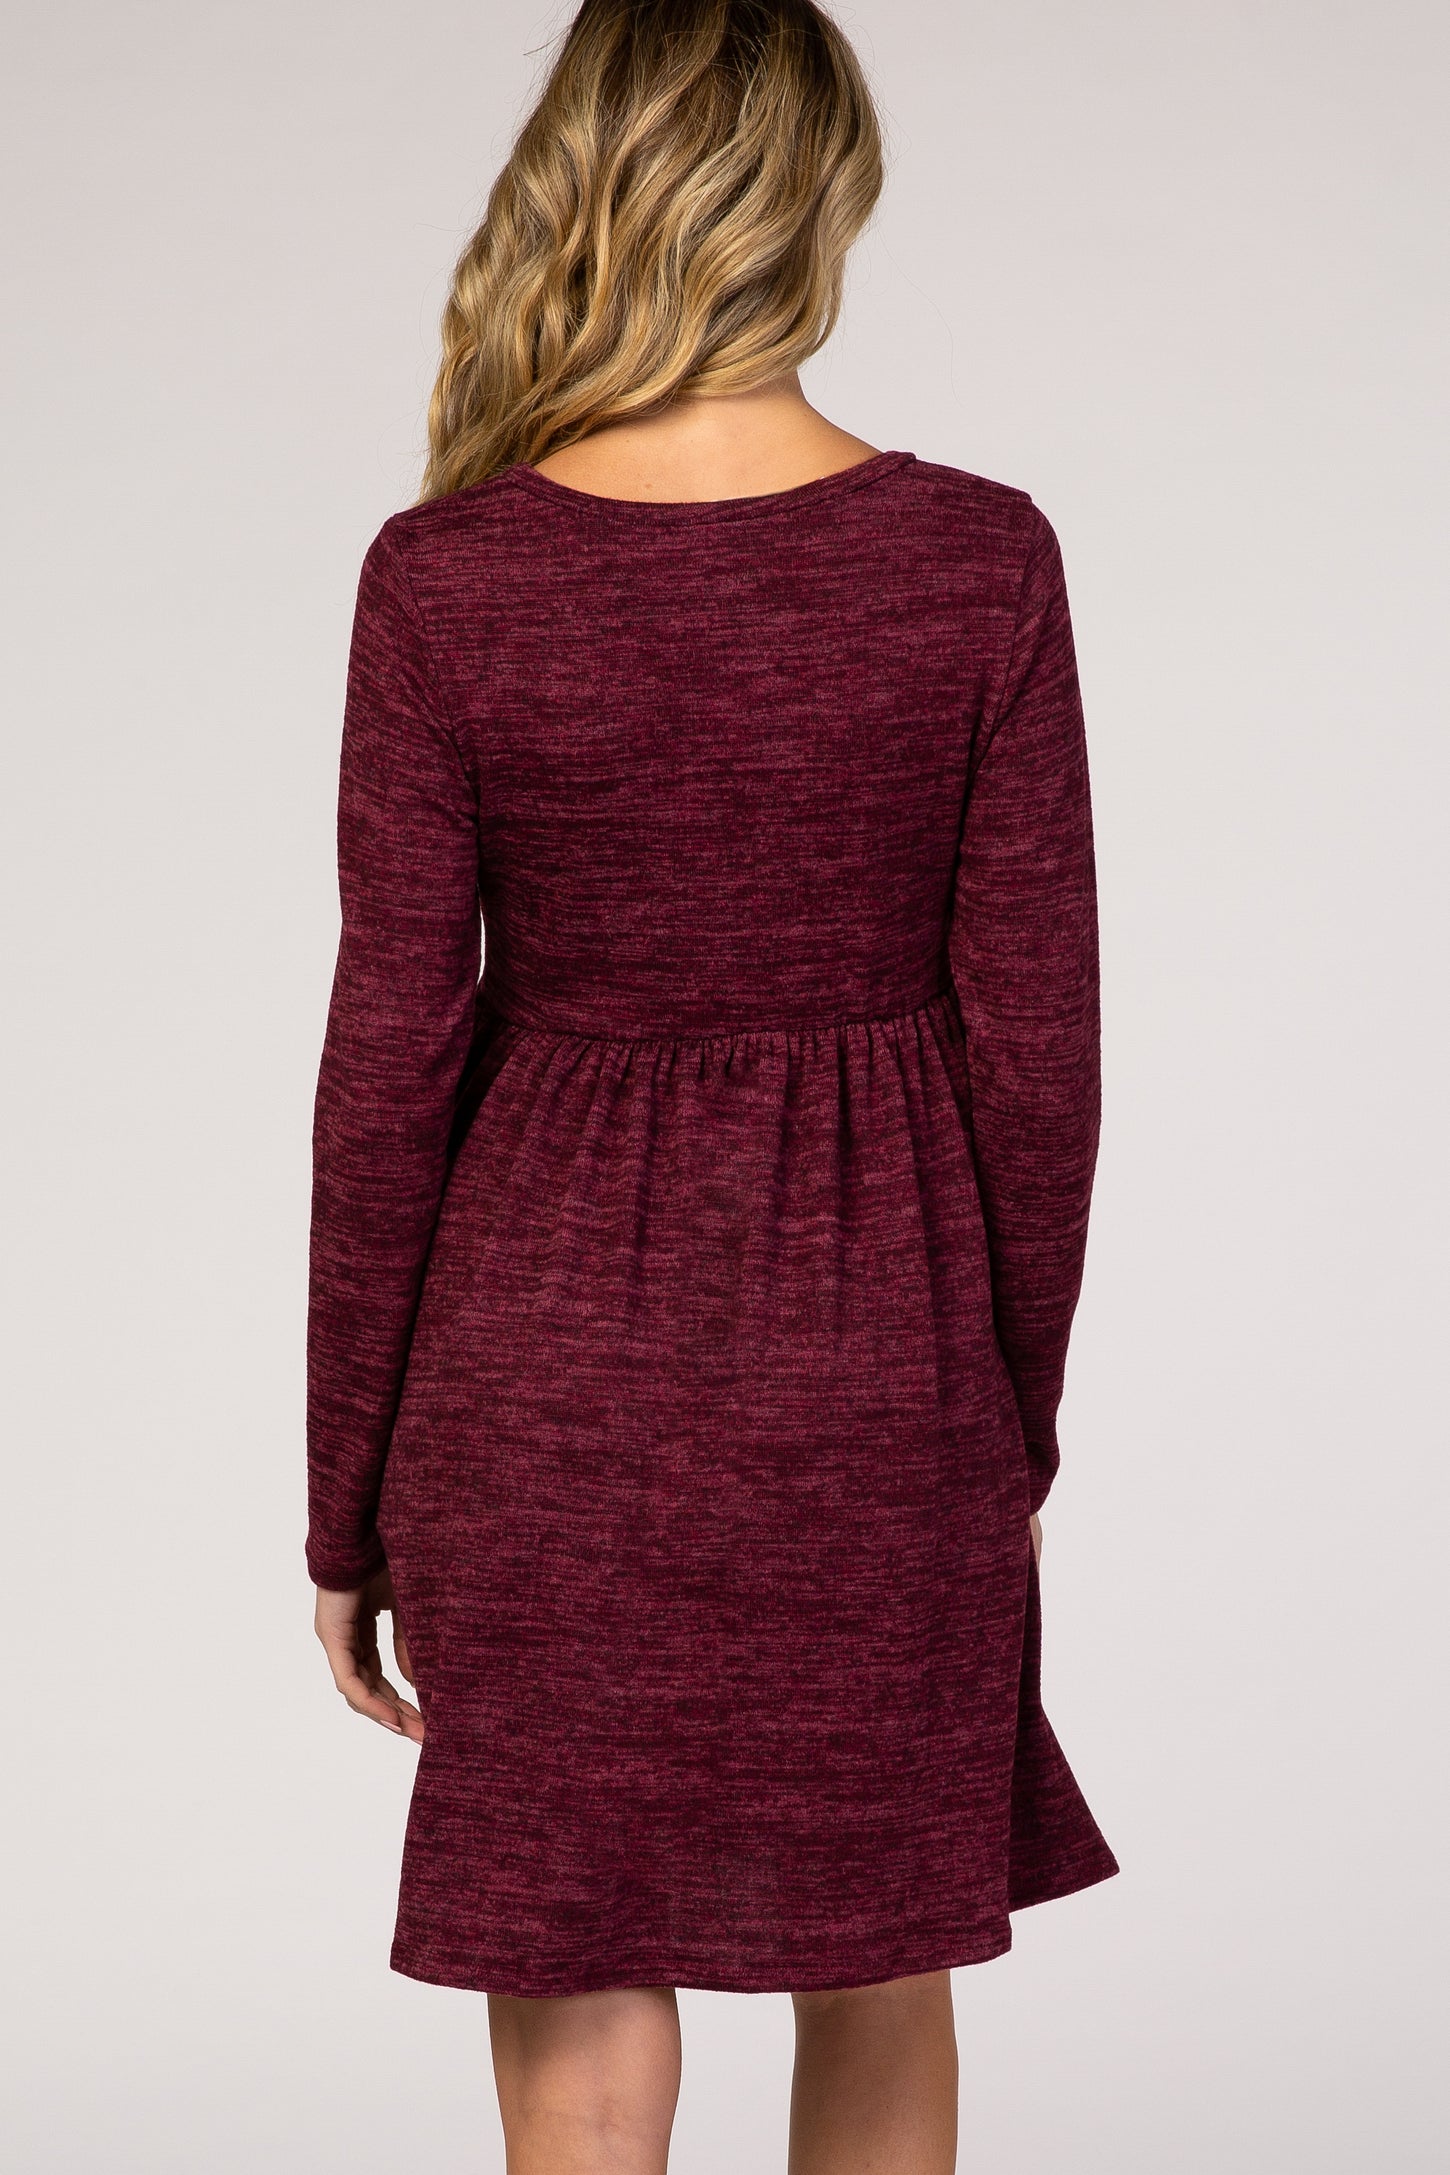 Burgundy Heathered Long Sleeve Knit Maternity Dress